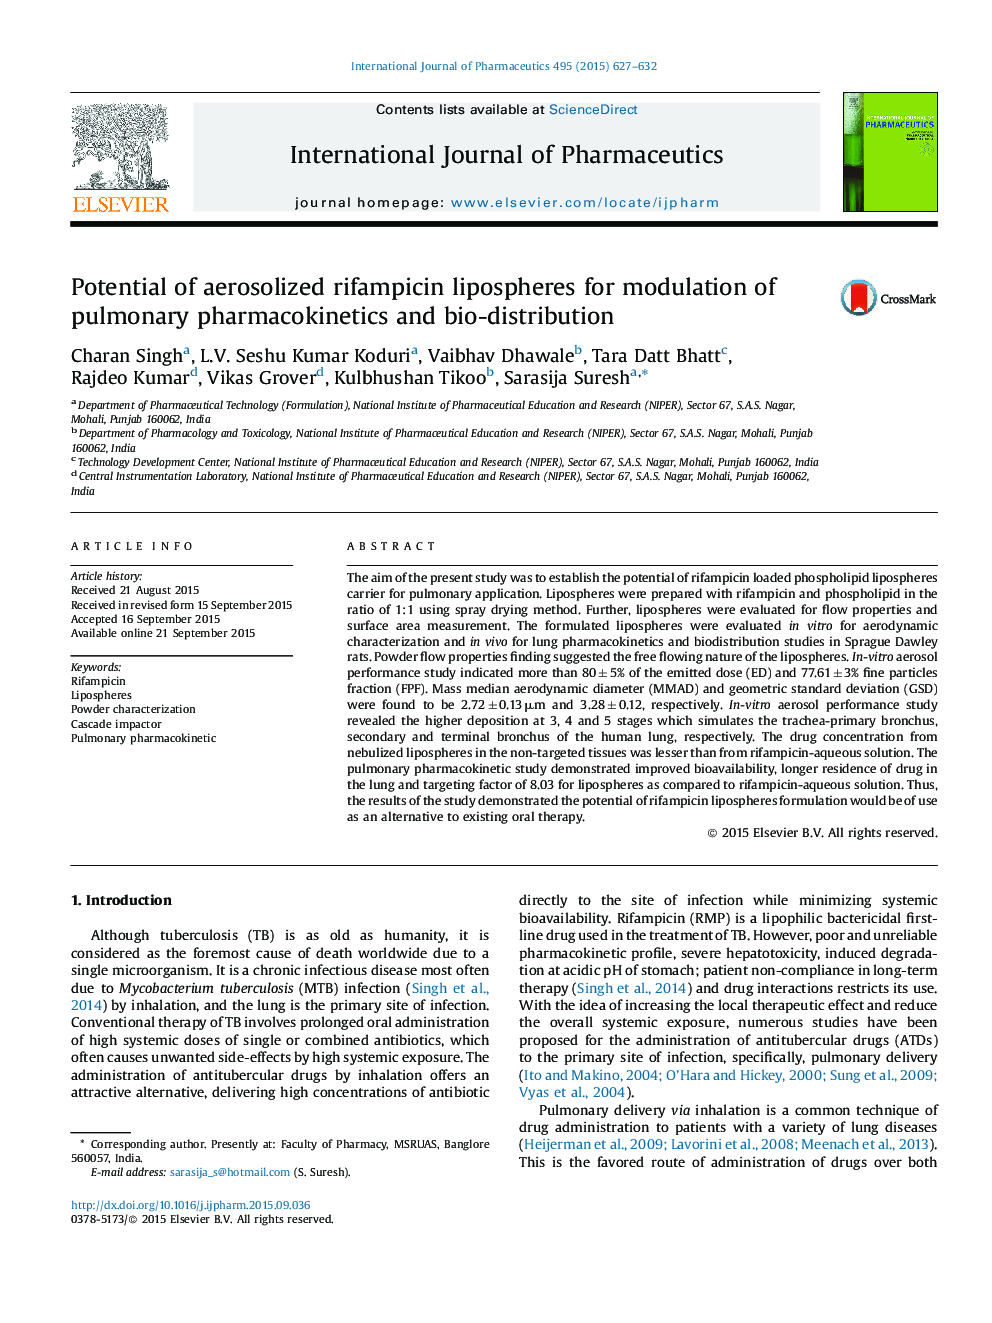 Potential of aerosolized rifampicin lipospheres for modulation of pulmonary pharmacokinetics and bio-distribution